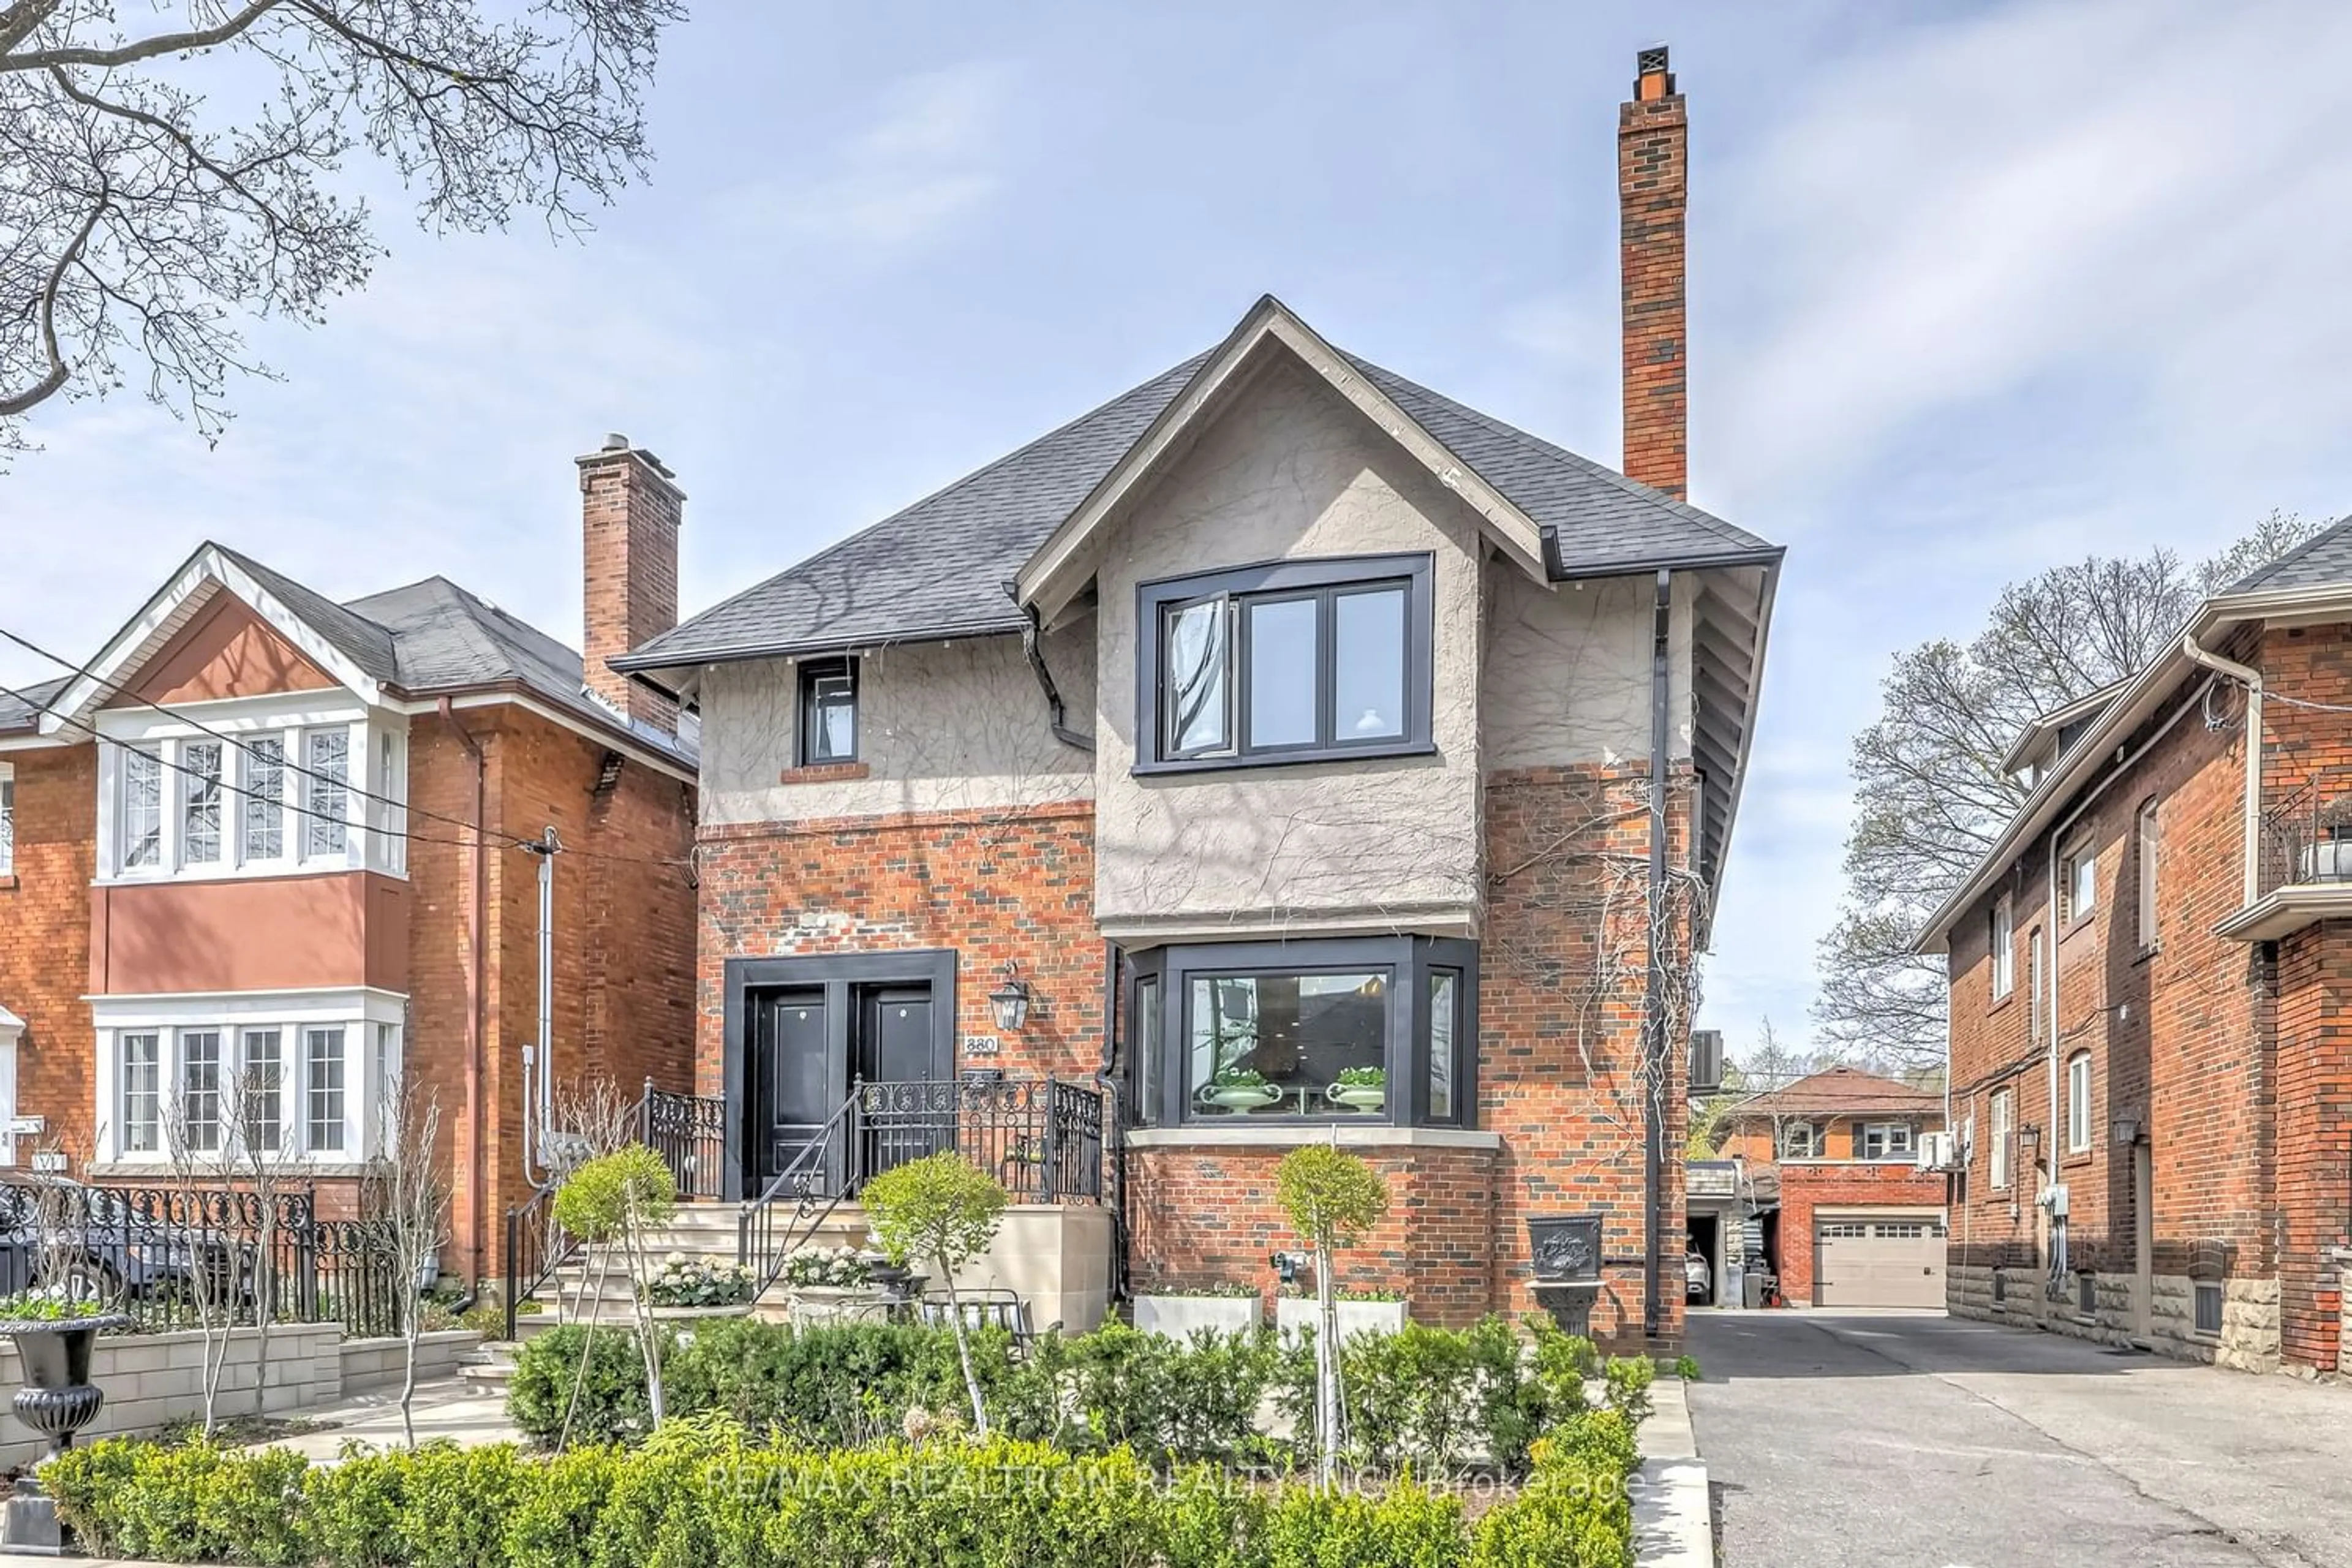 Home with brick exterior material for 880 Avenue Rd, Toronto Ontario M5P 2K6